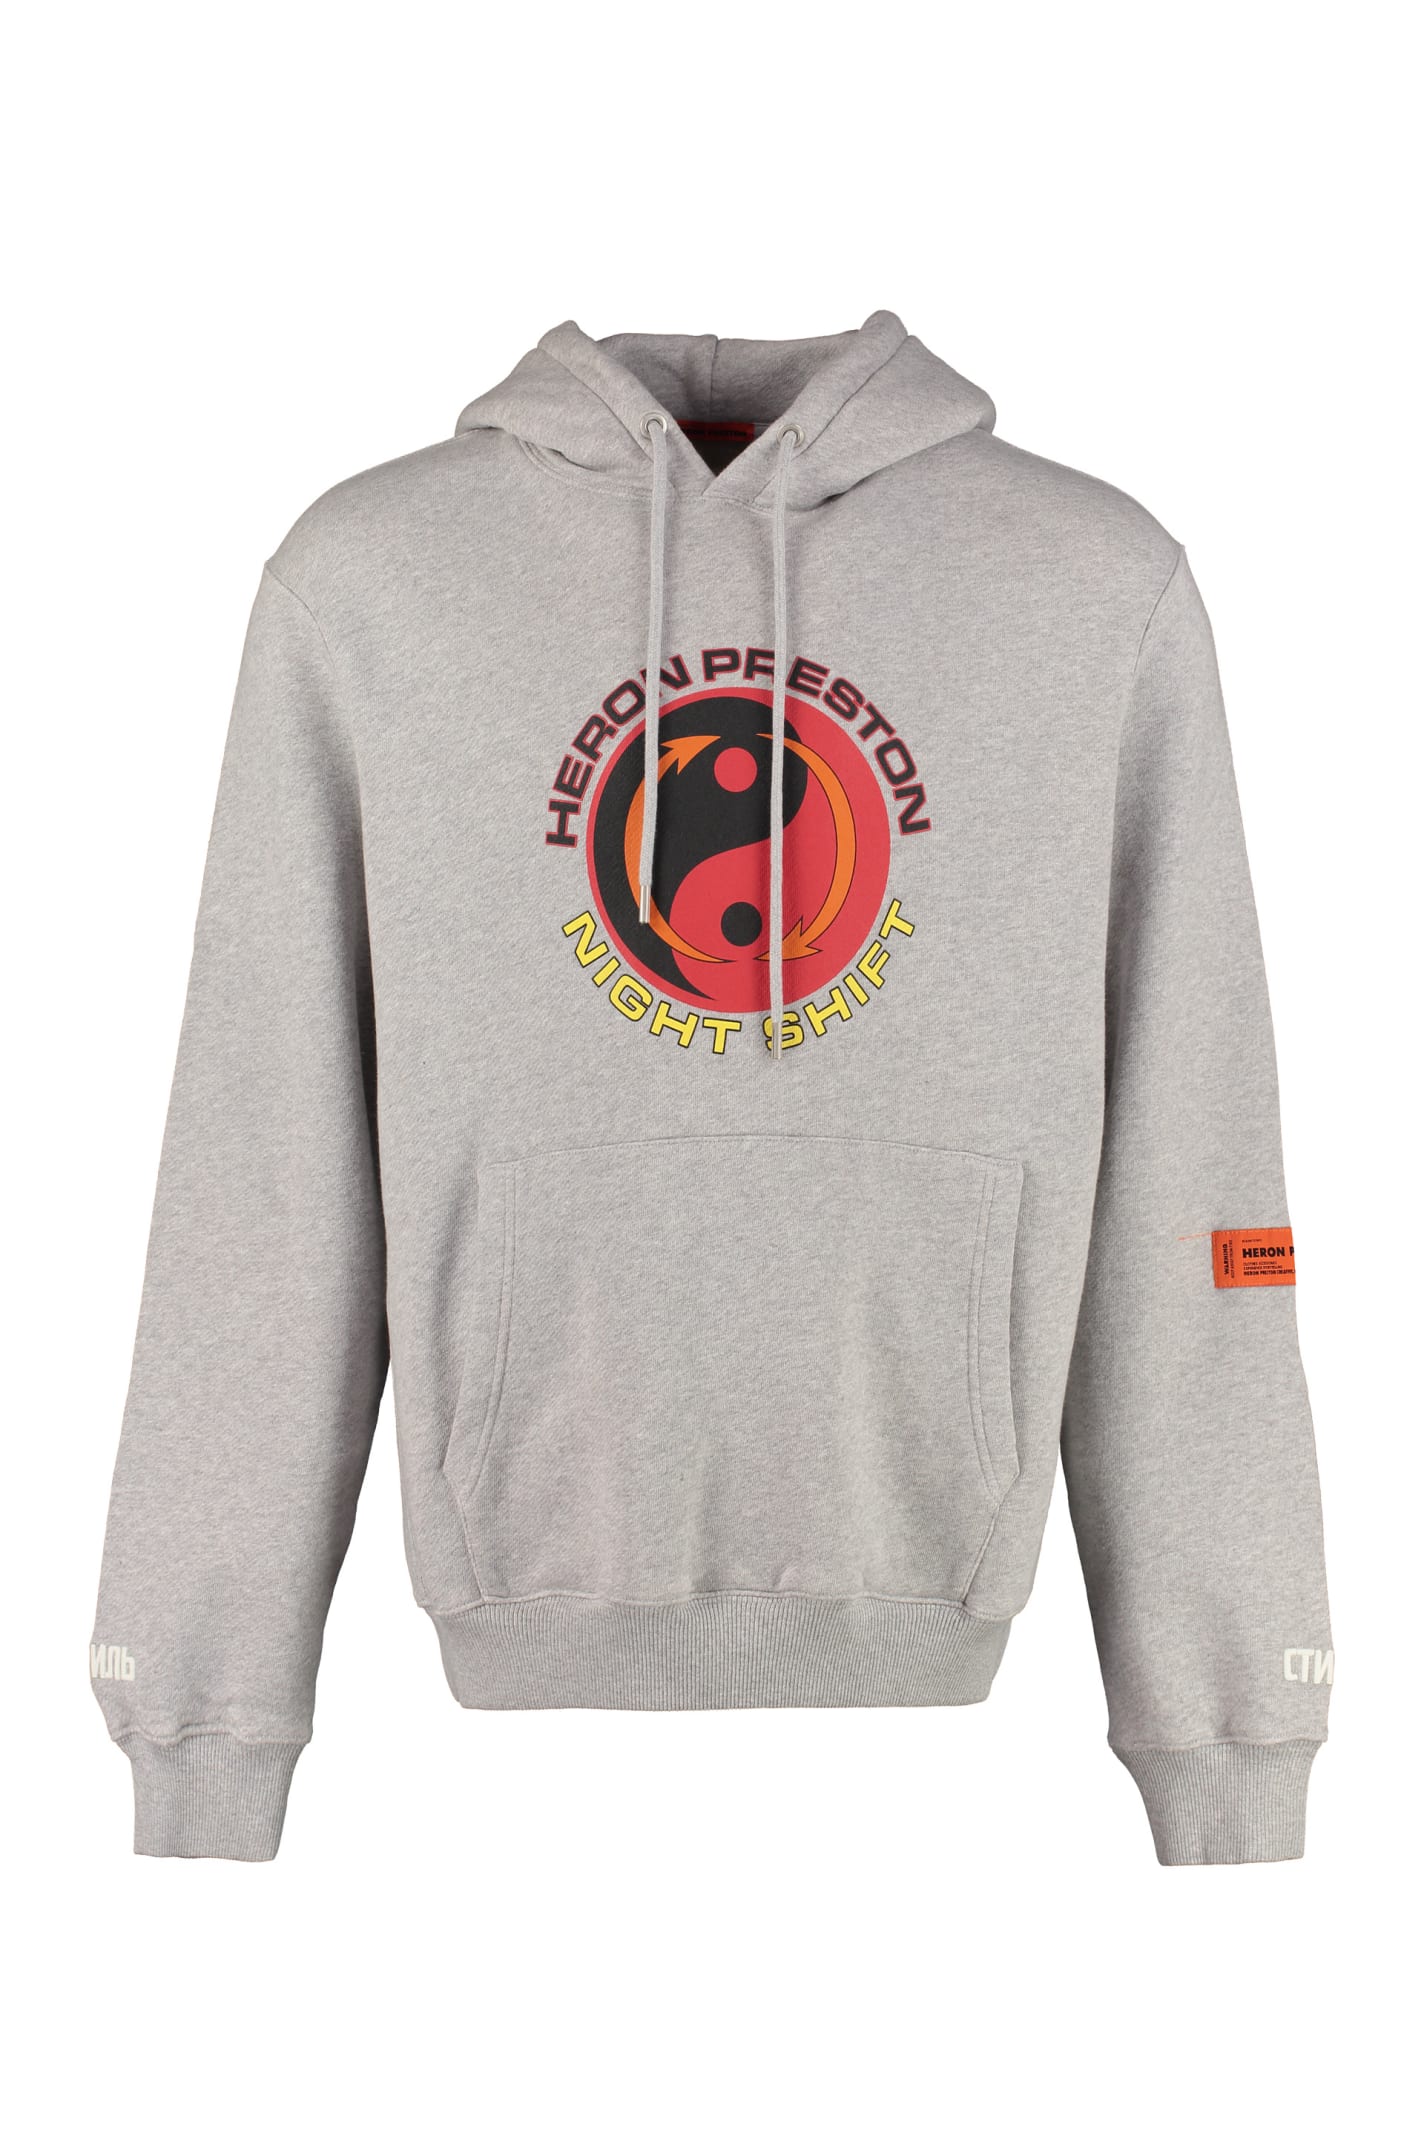 heron preston hoodie price